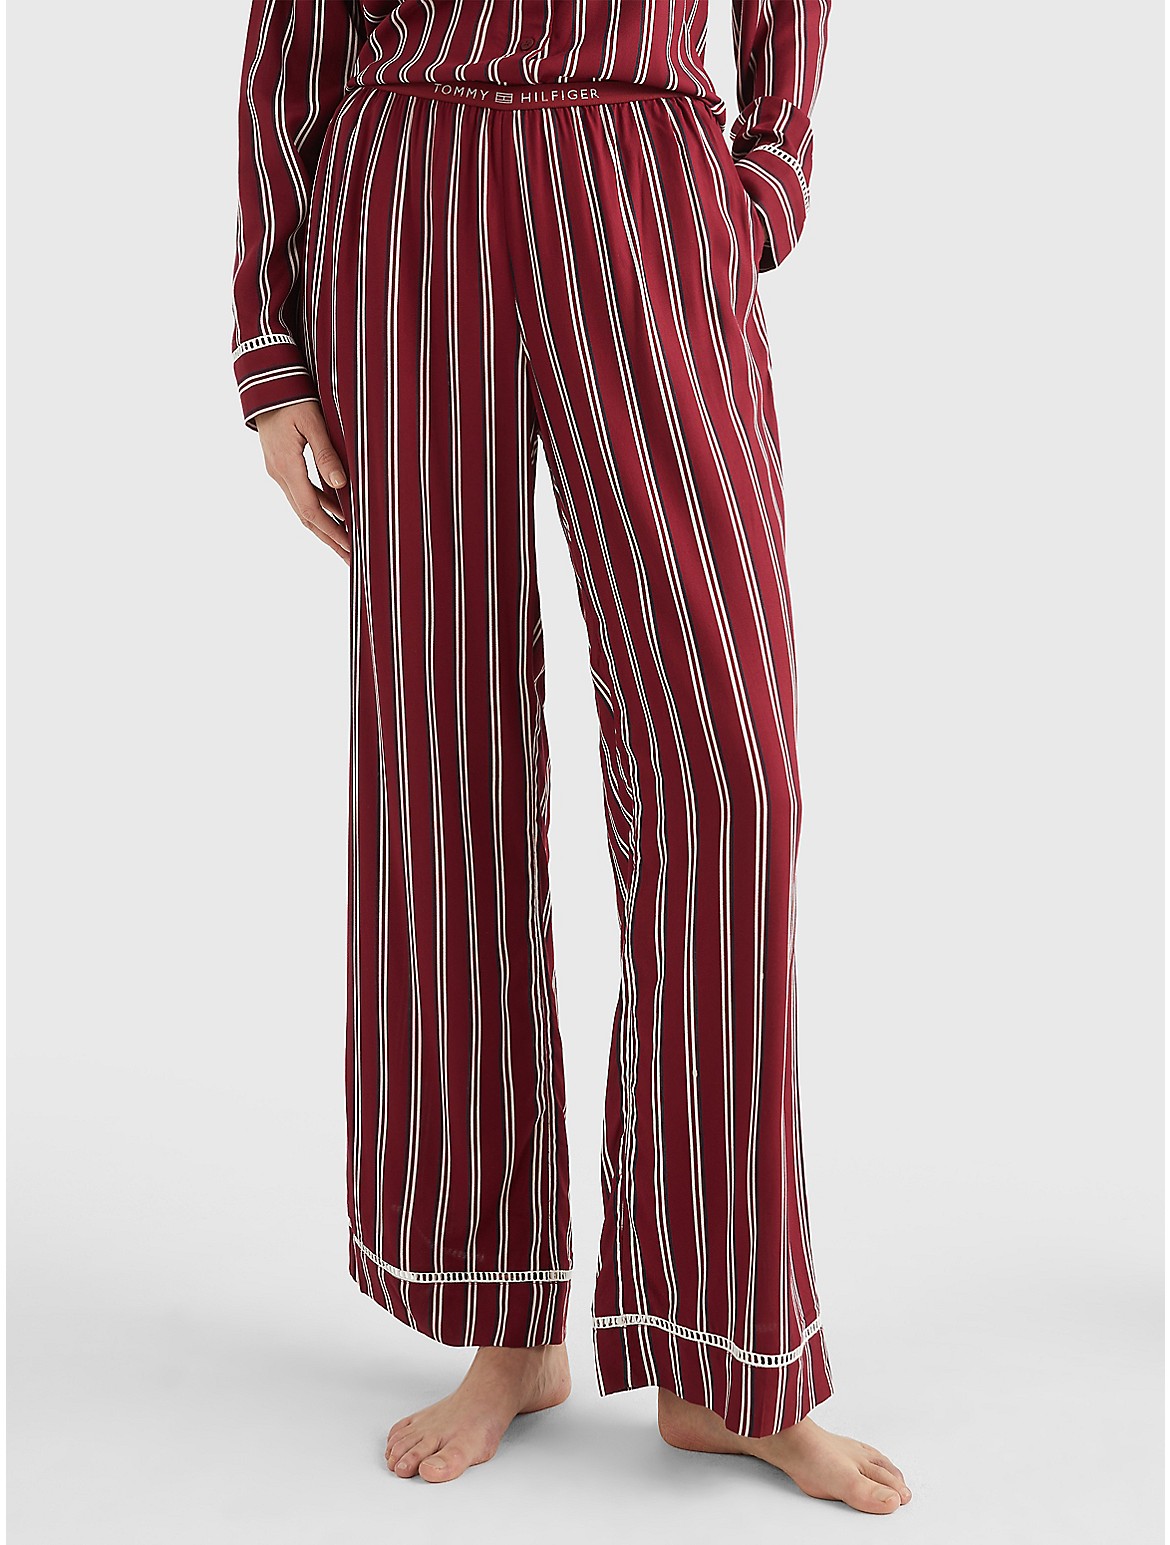 Tommy Hilfiger Women's Stripe Pajama Pant - Red - M